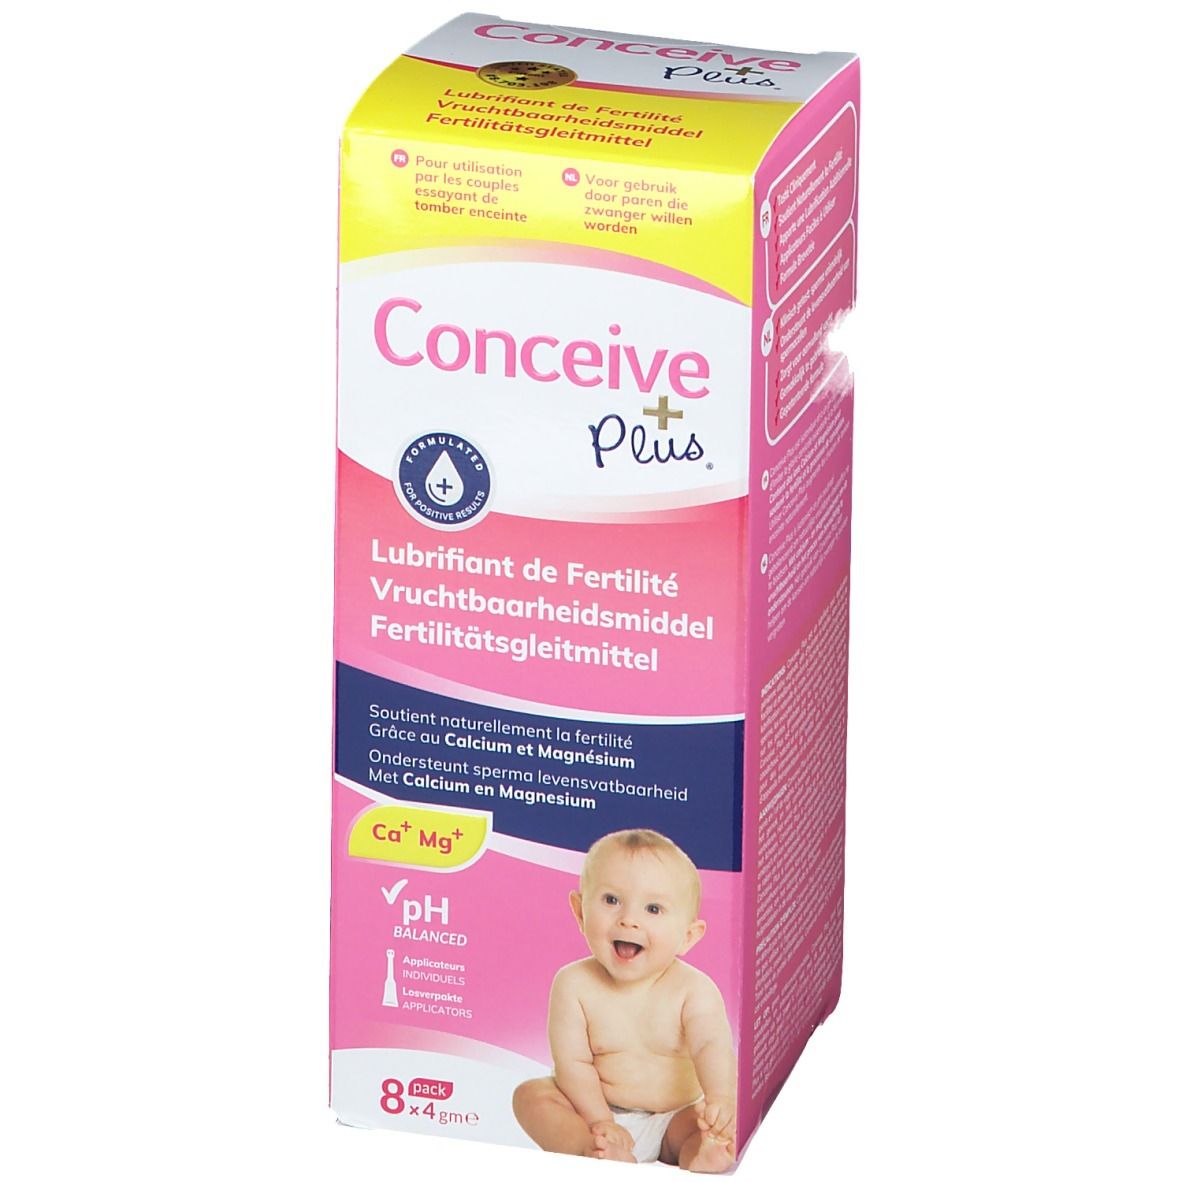 Conceive Plus Fertility Lubricante Pre-Filled Applicator